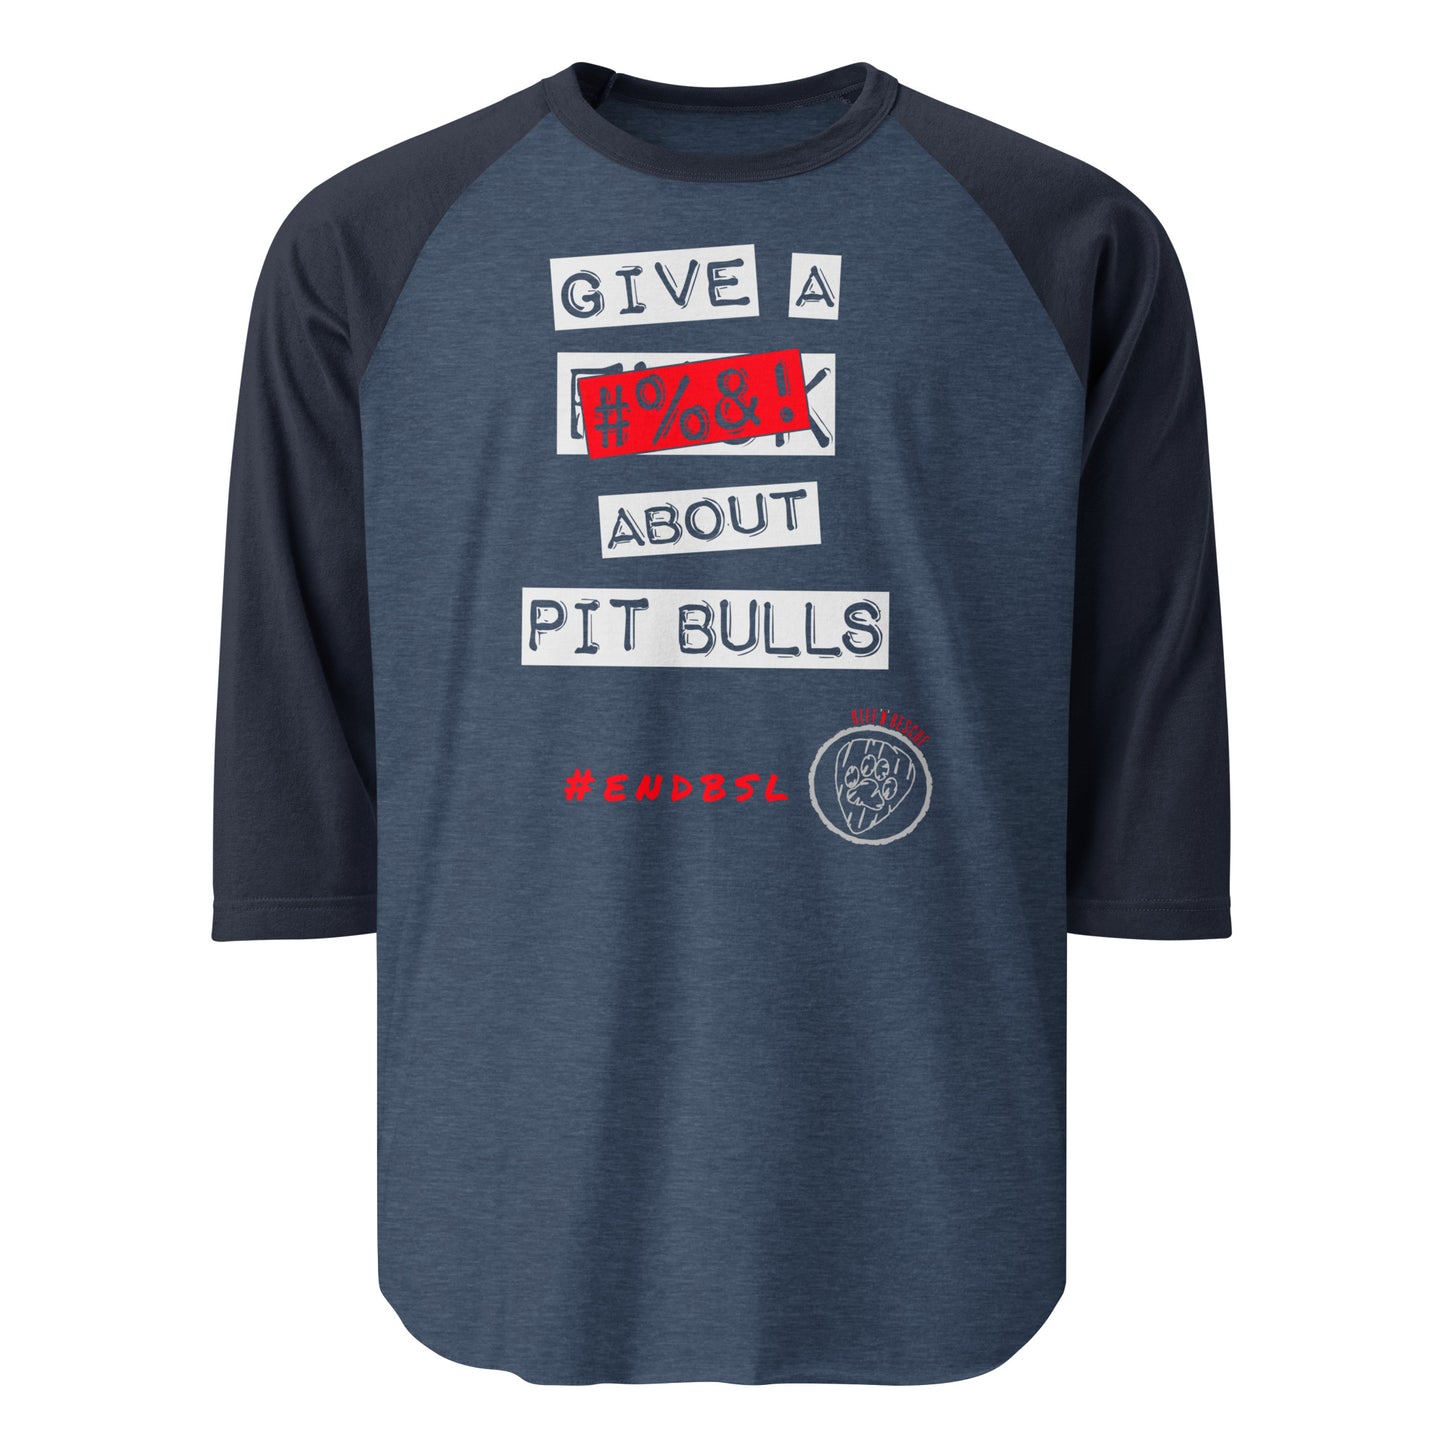 Give A #%&! About Pit Bulls 3/4 sleeve raglan shirt